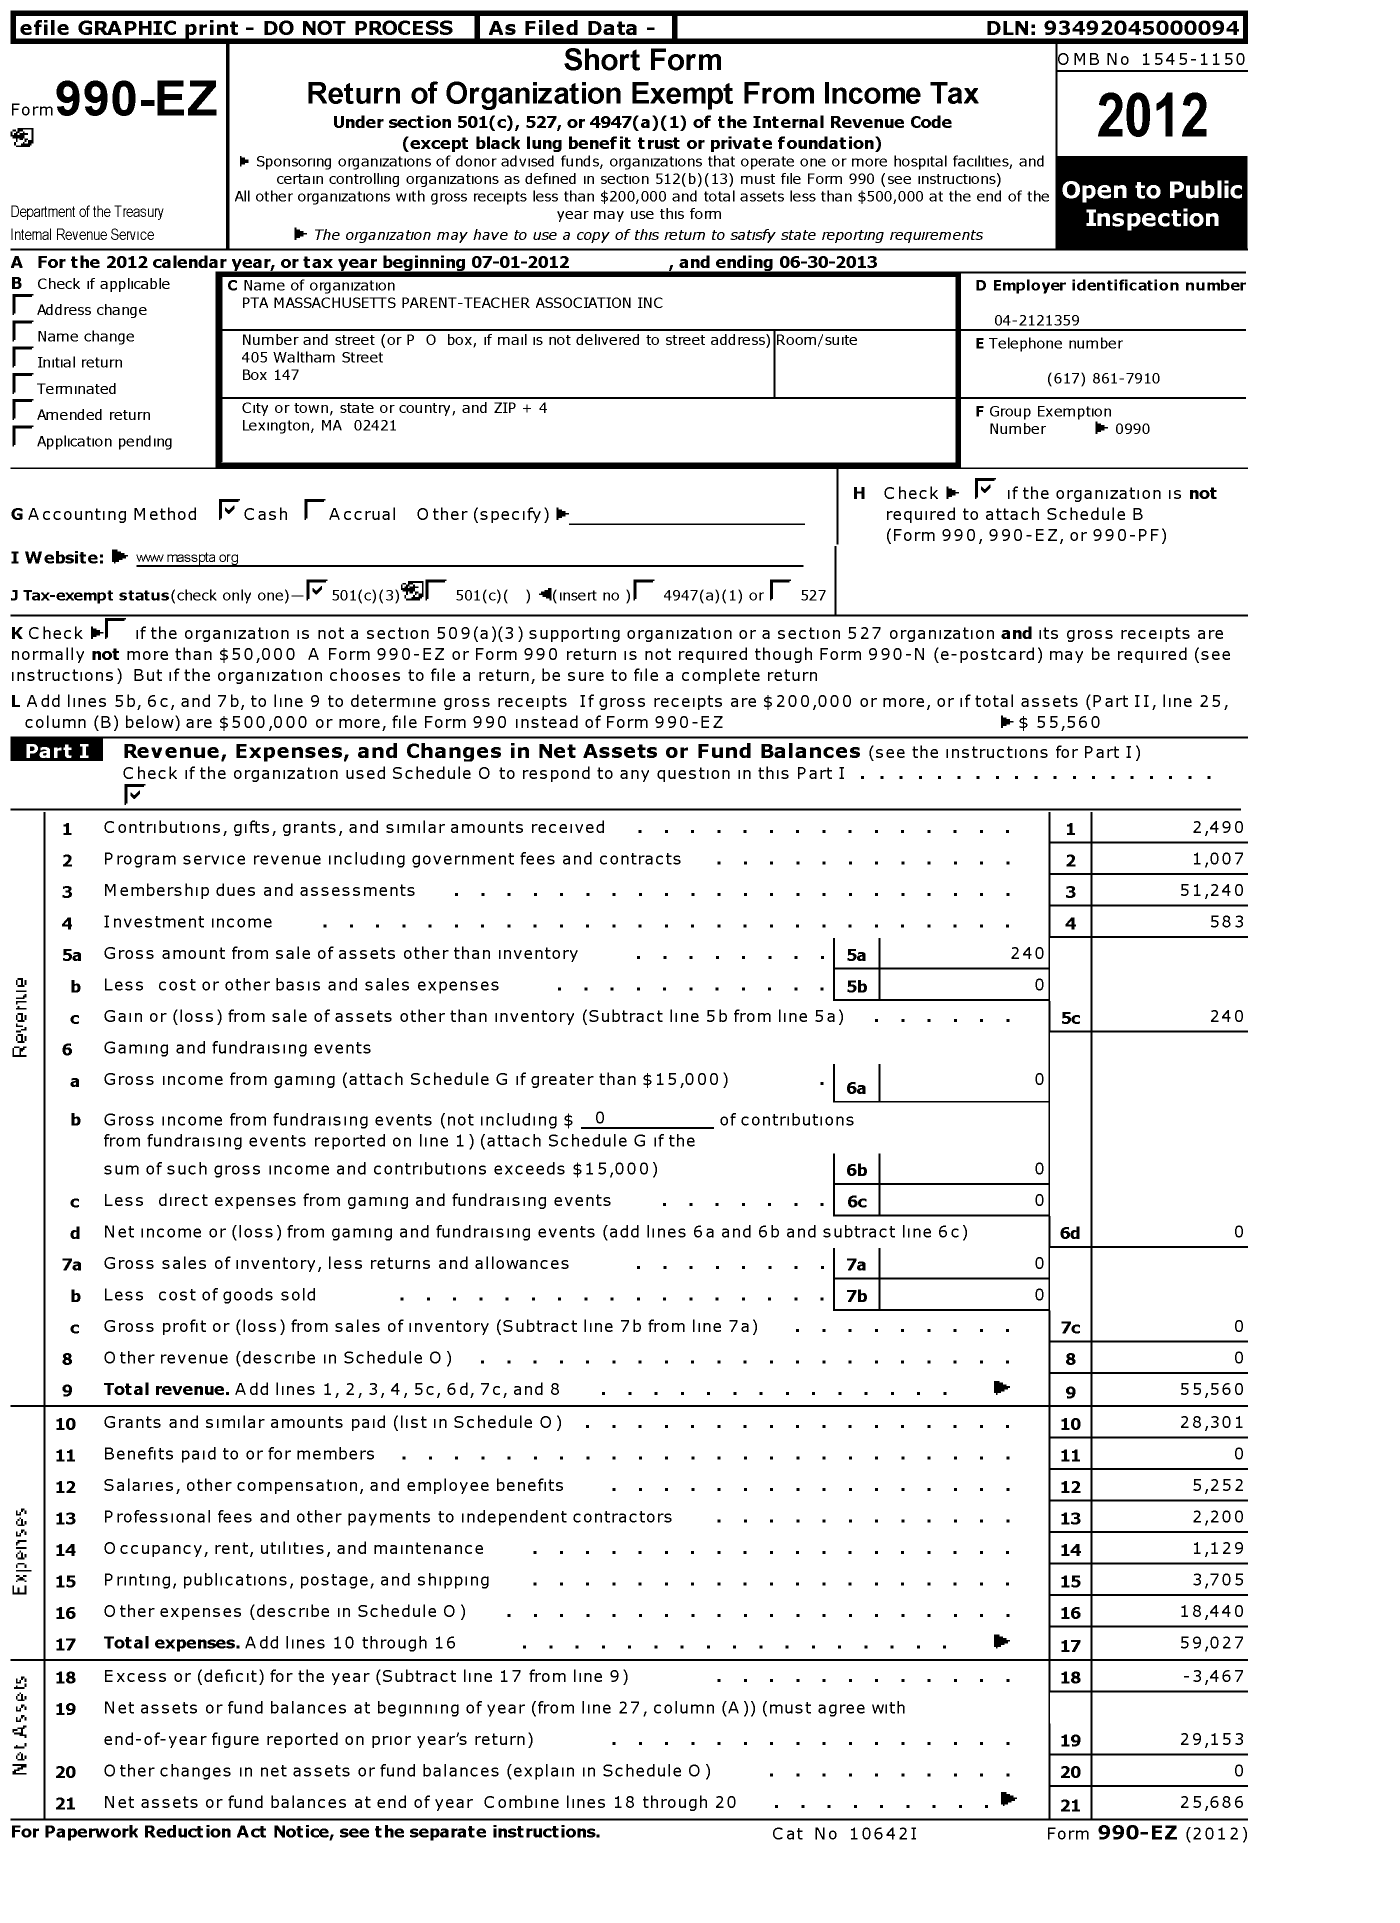 Image of first page of 2012 Form 990EZ for PTA Massachusetts Parent-Teacher Association